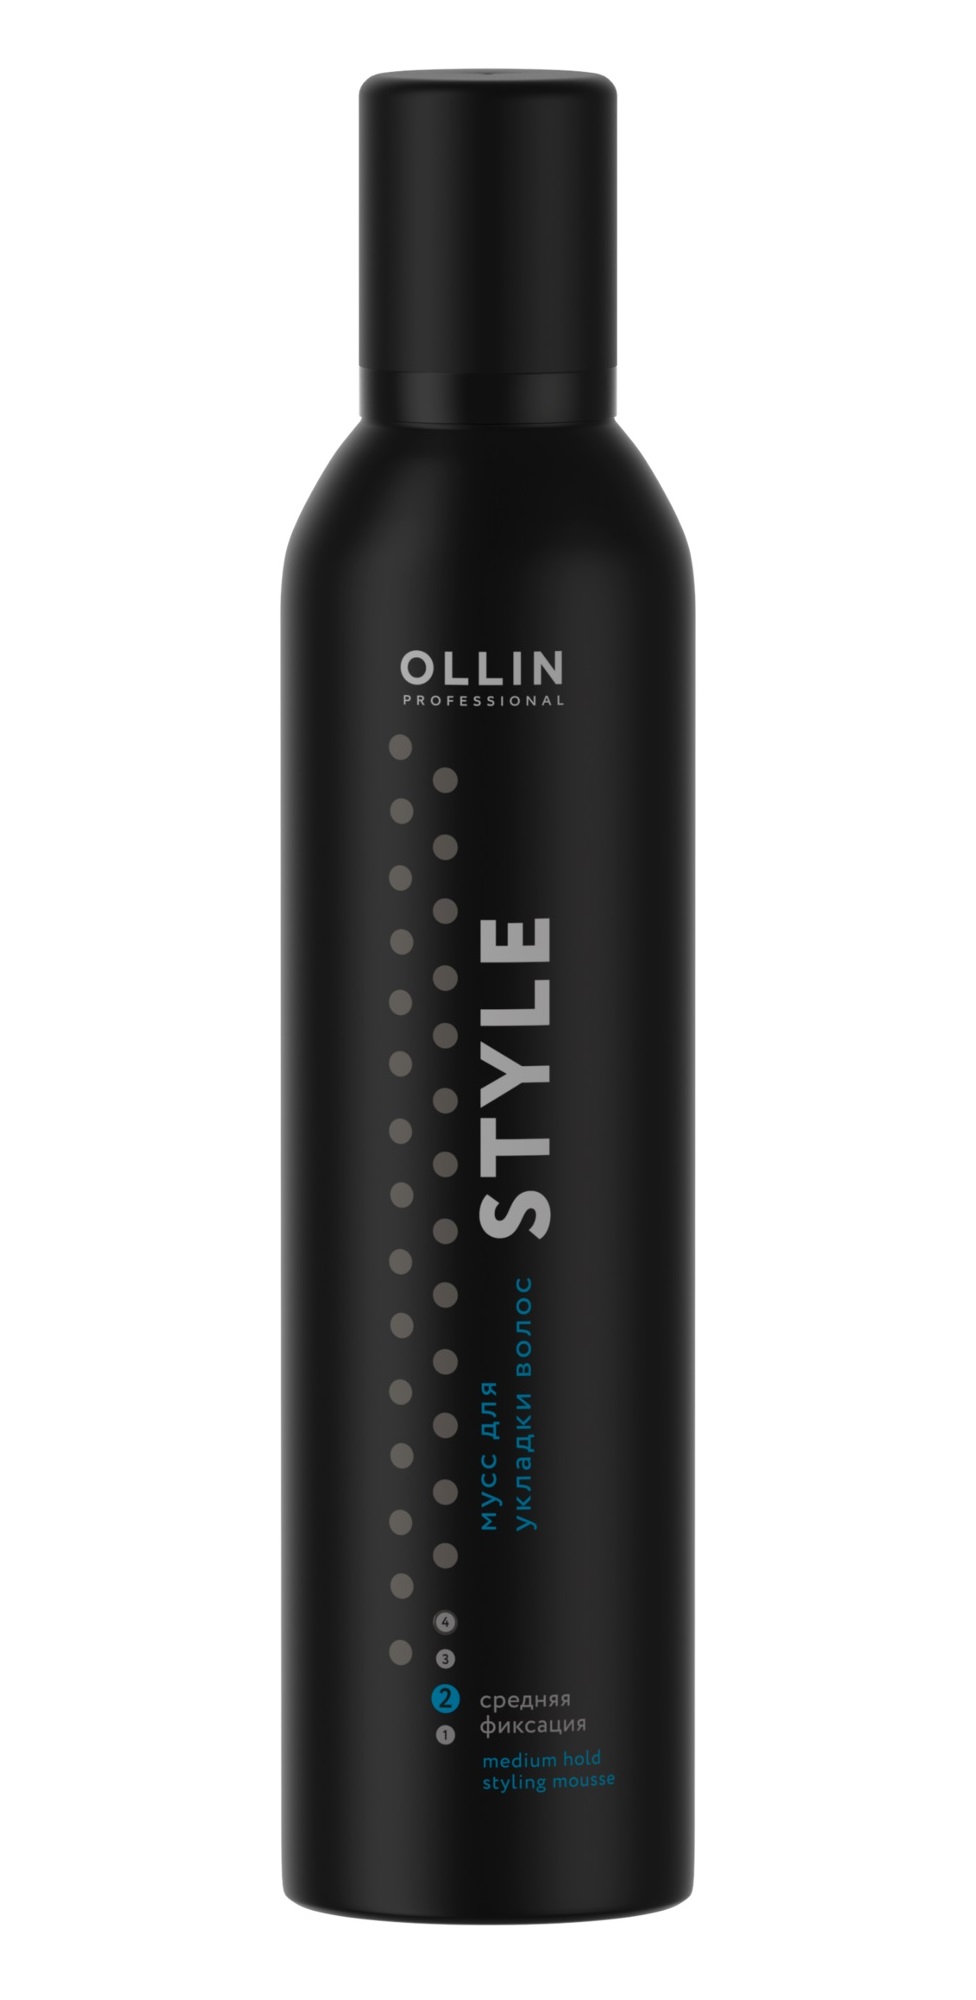 Ollin Professional Мусс для укладки волос средней фиксации, 250 мл (Ollin Professional, Style) мусс для укладки средней фиксации ollin professional style 250 мл